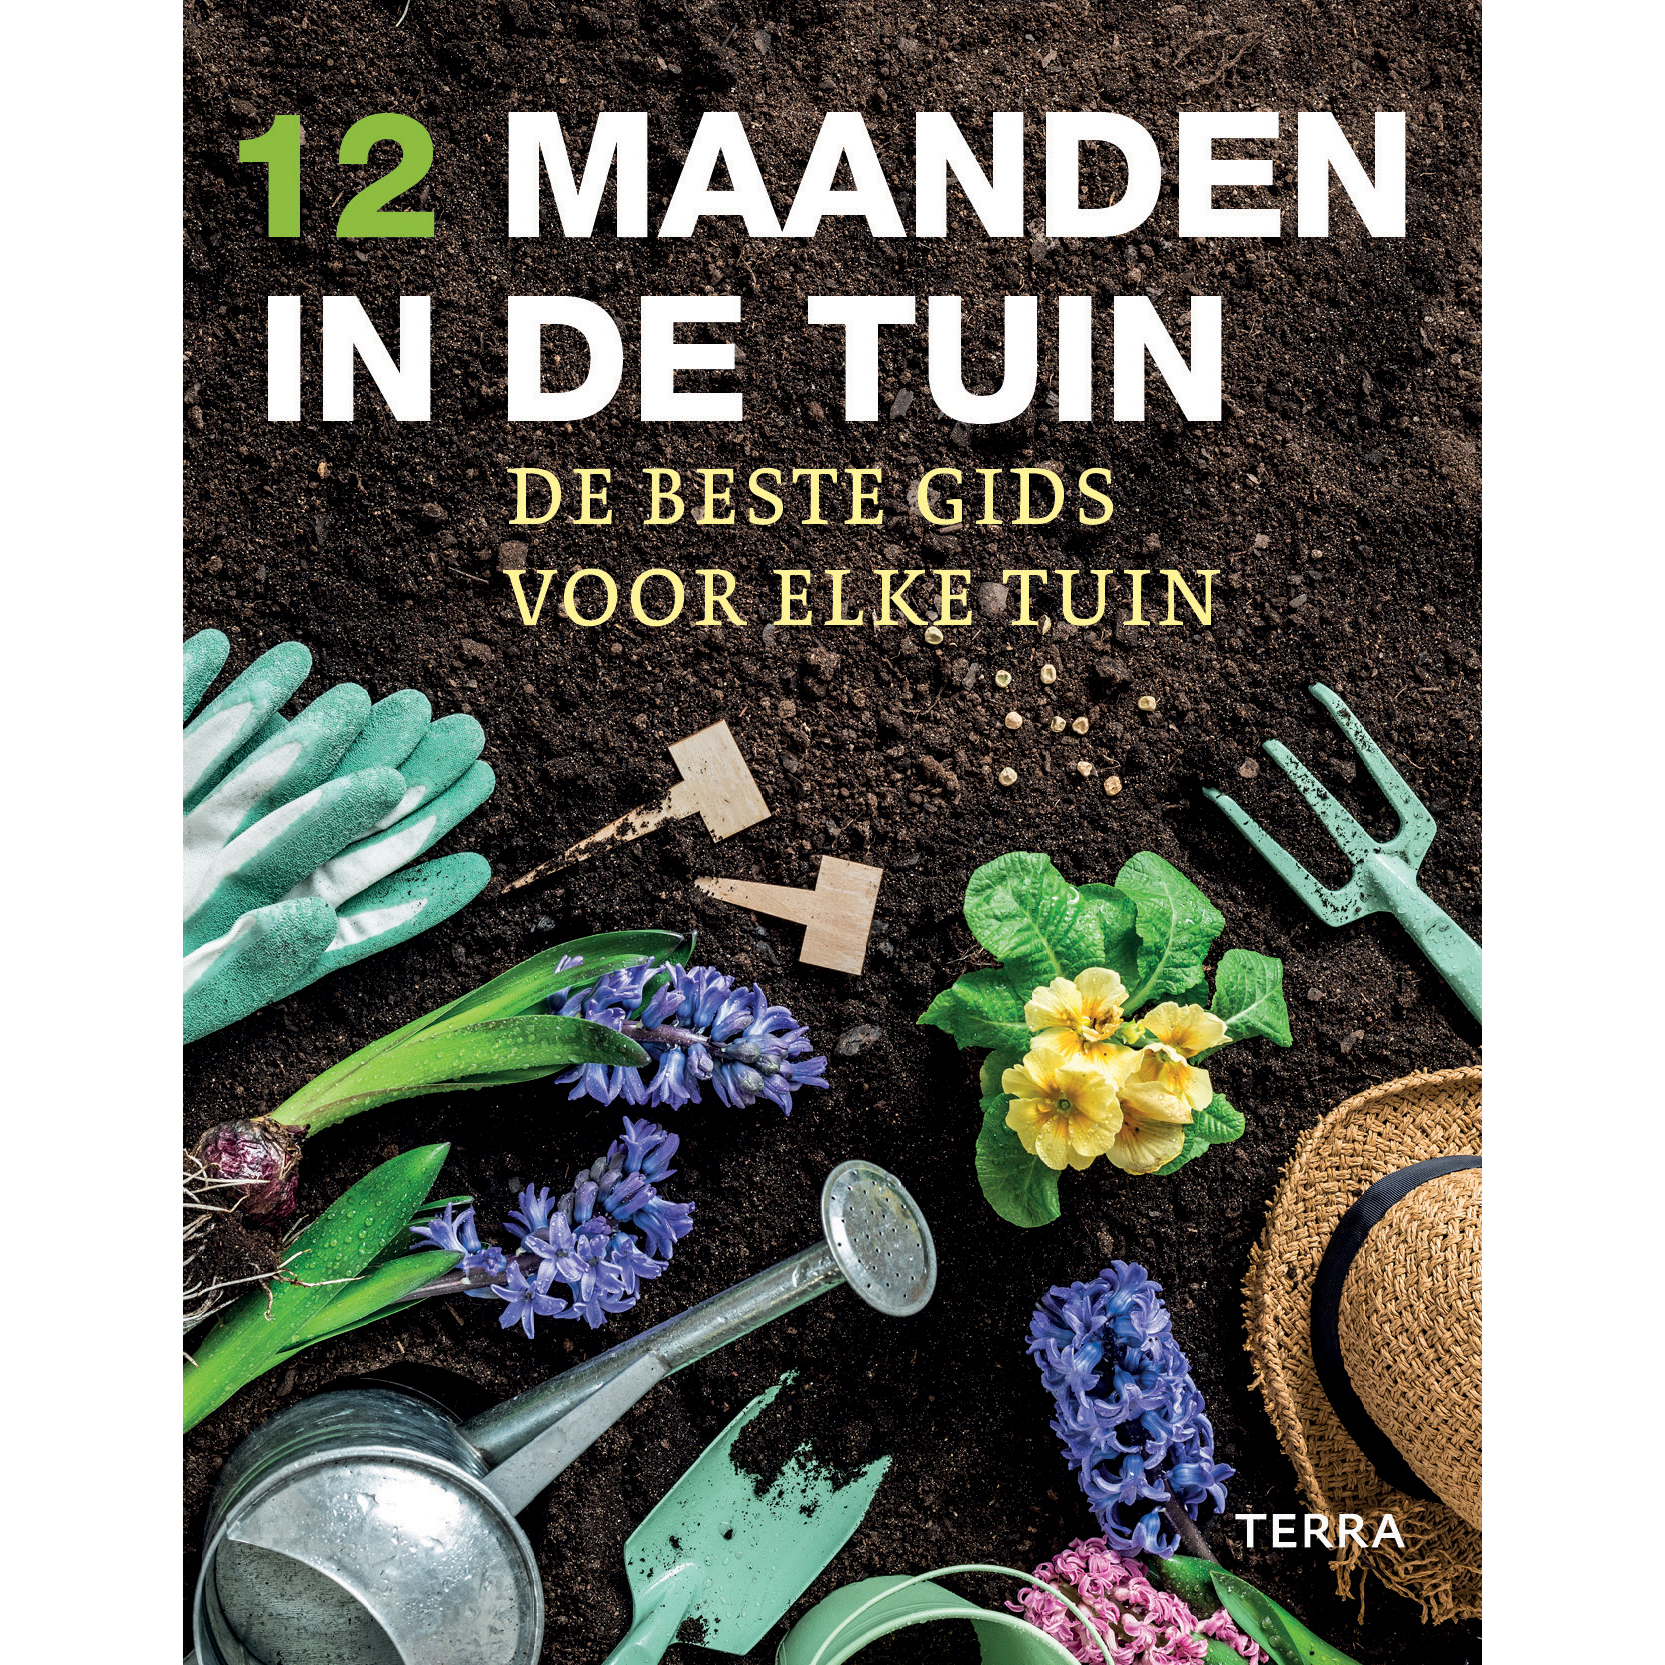 Boek '12 maanden in tuin' Royal Society - Tuinen-shop.nl